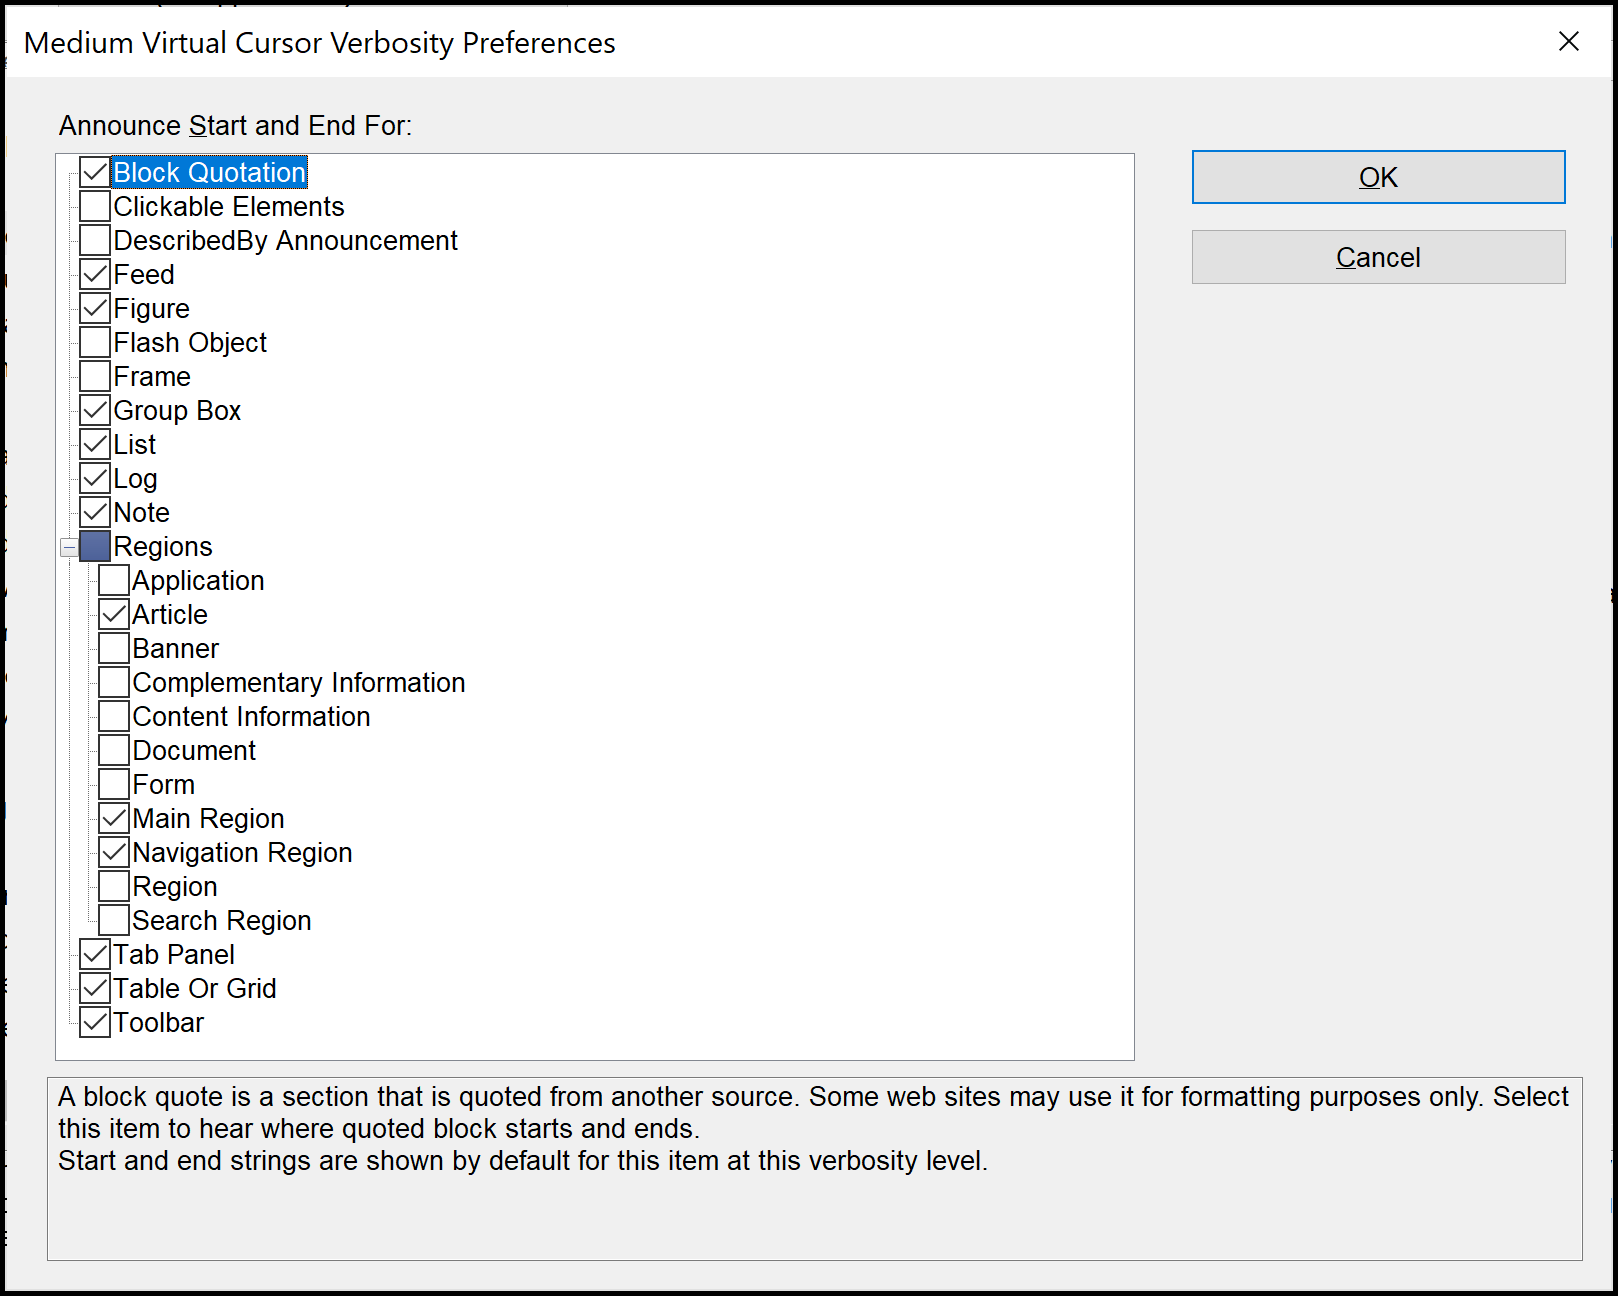 JAWS Settings Center showing medium virtual cursor verbosity preferences.